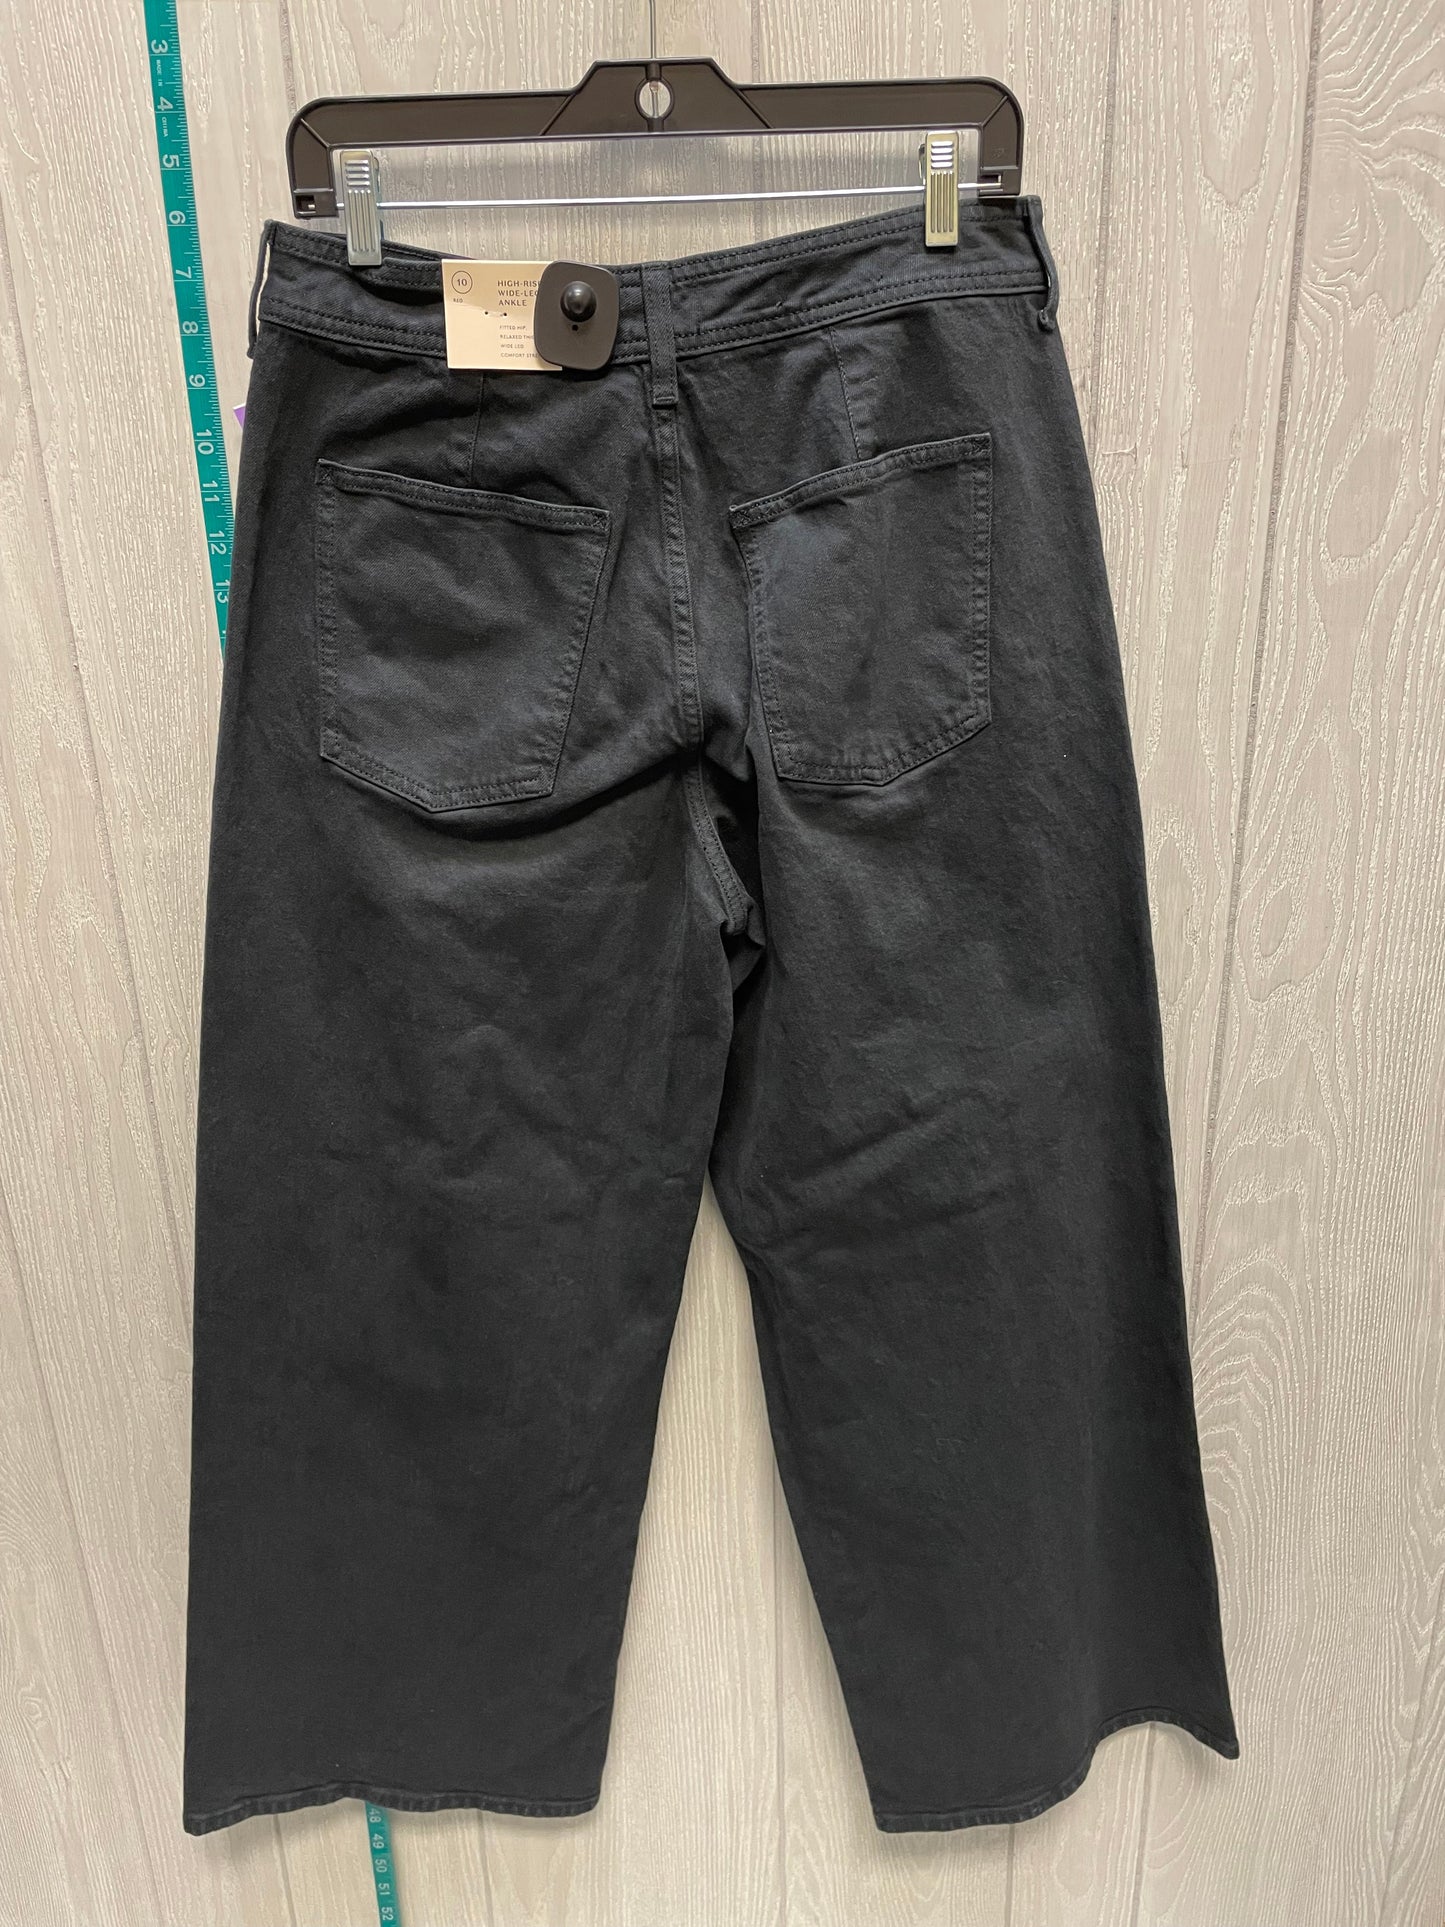 Black Denim Jeans Wide Leg Universal Thread, Size 10